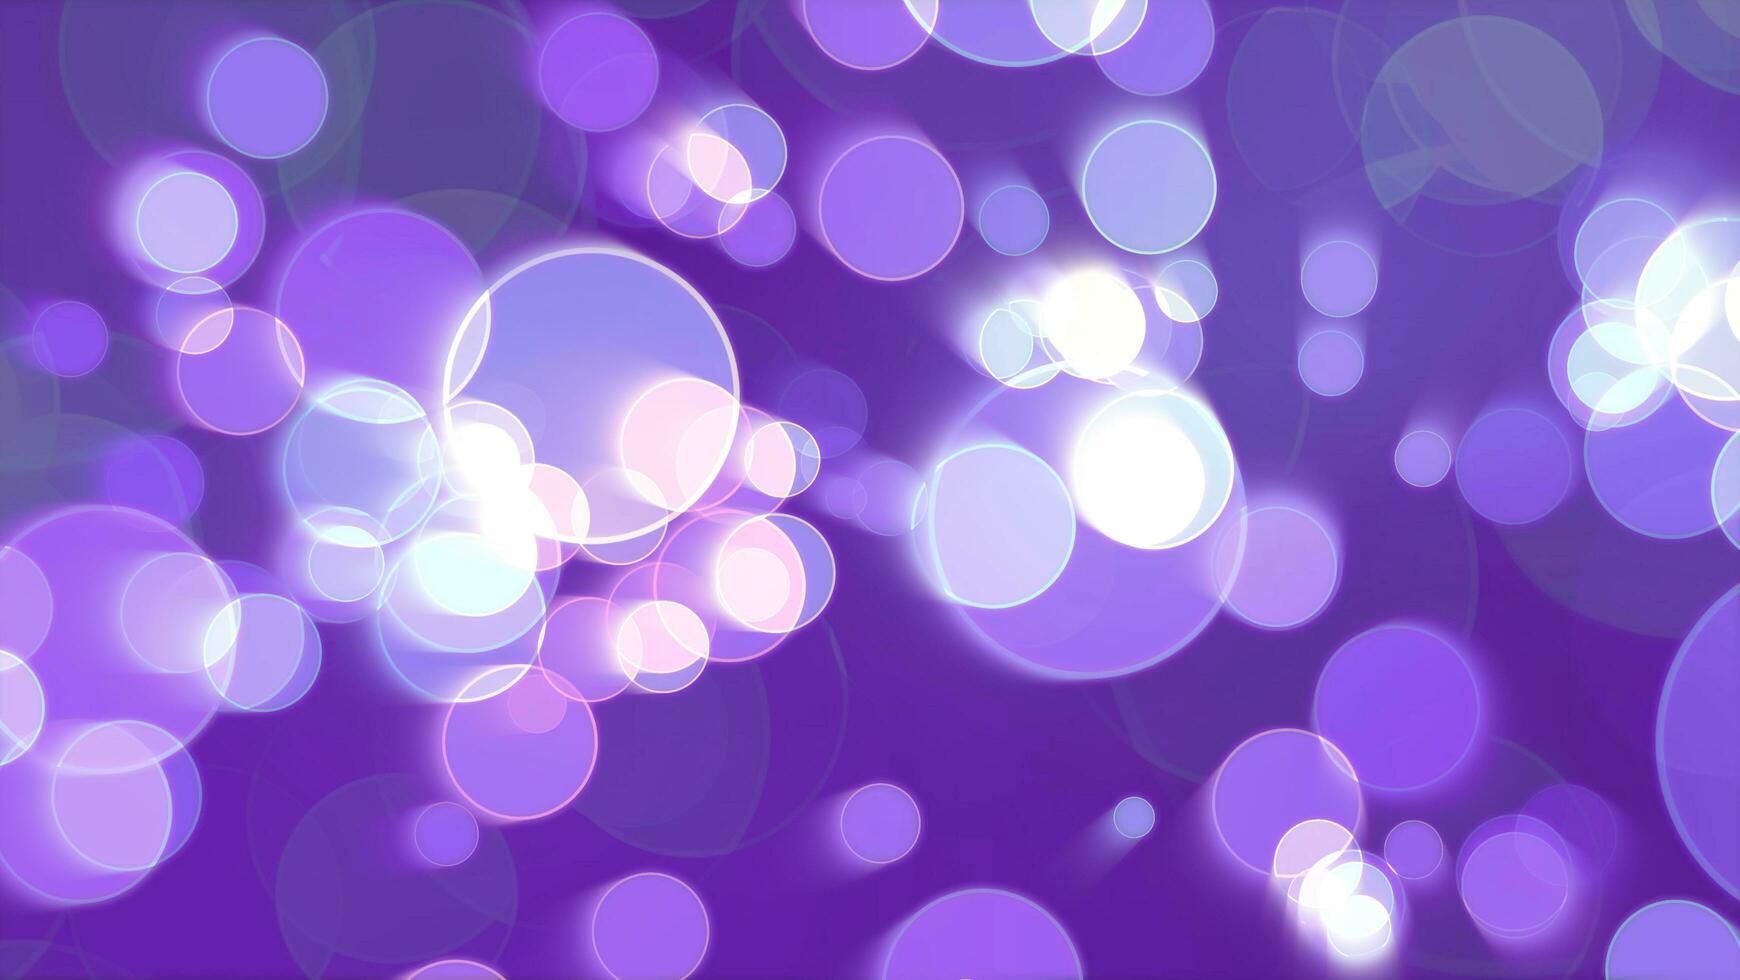 vistoso púrpura rápido difuminar ligero burbuja adivinar dimensión bokeh foto